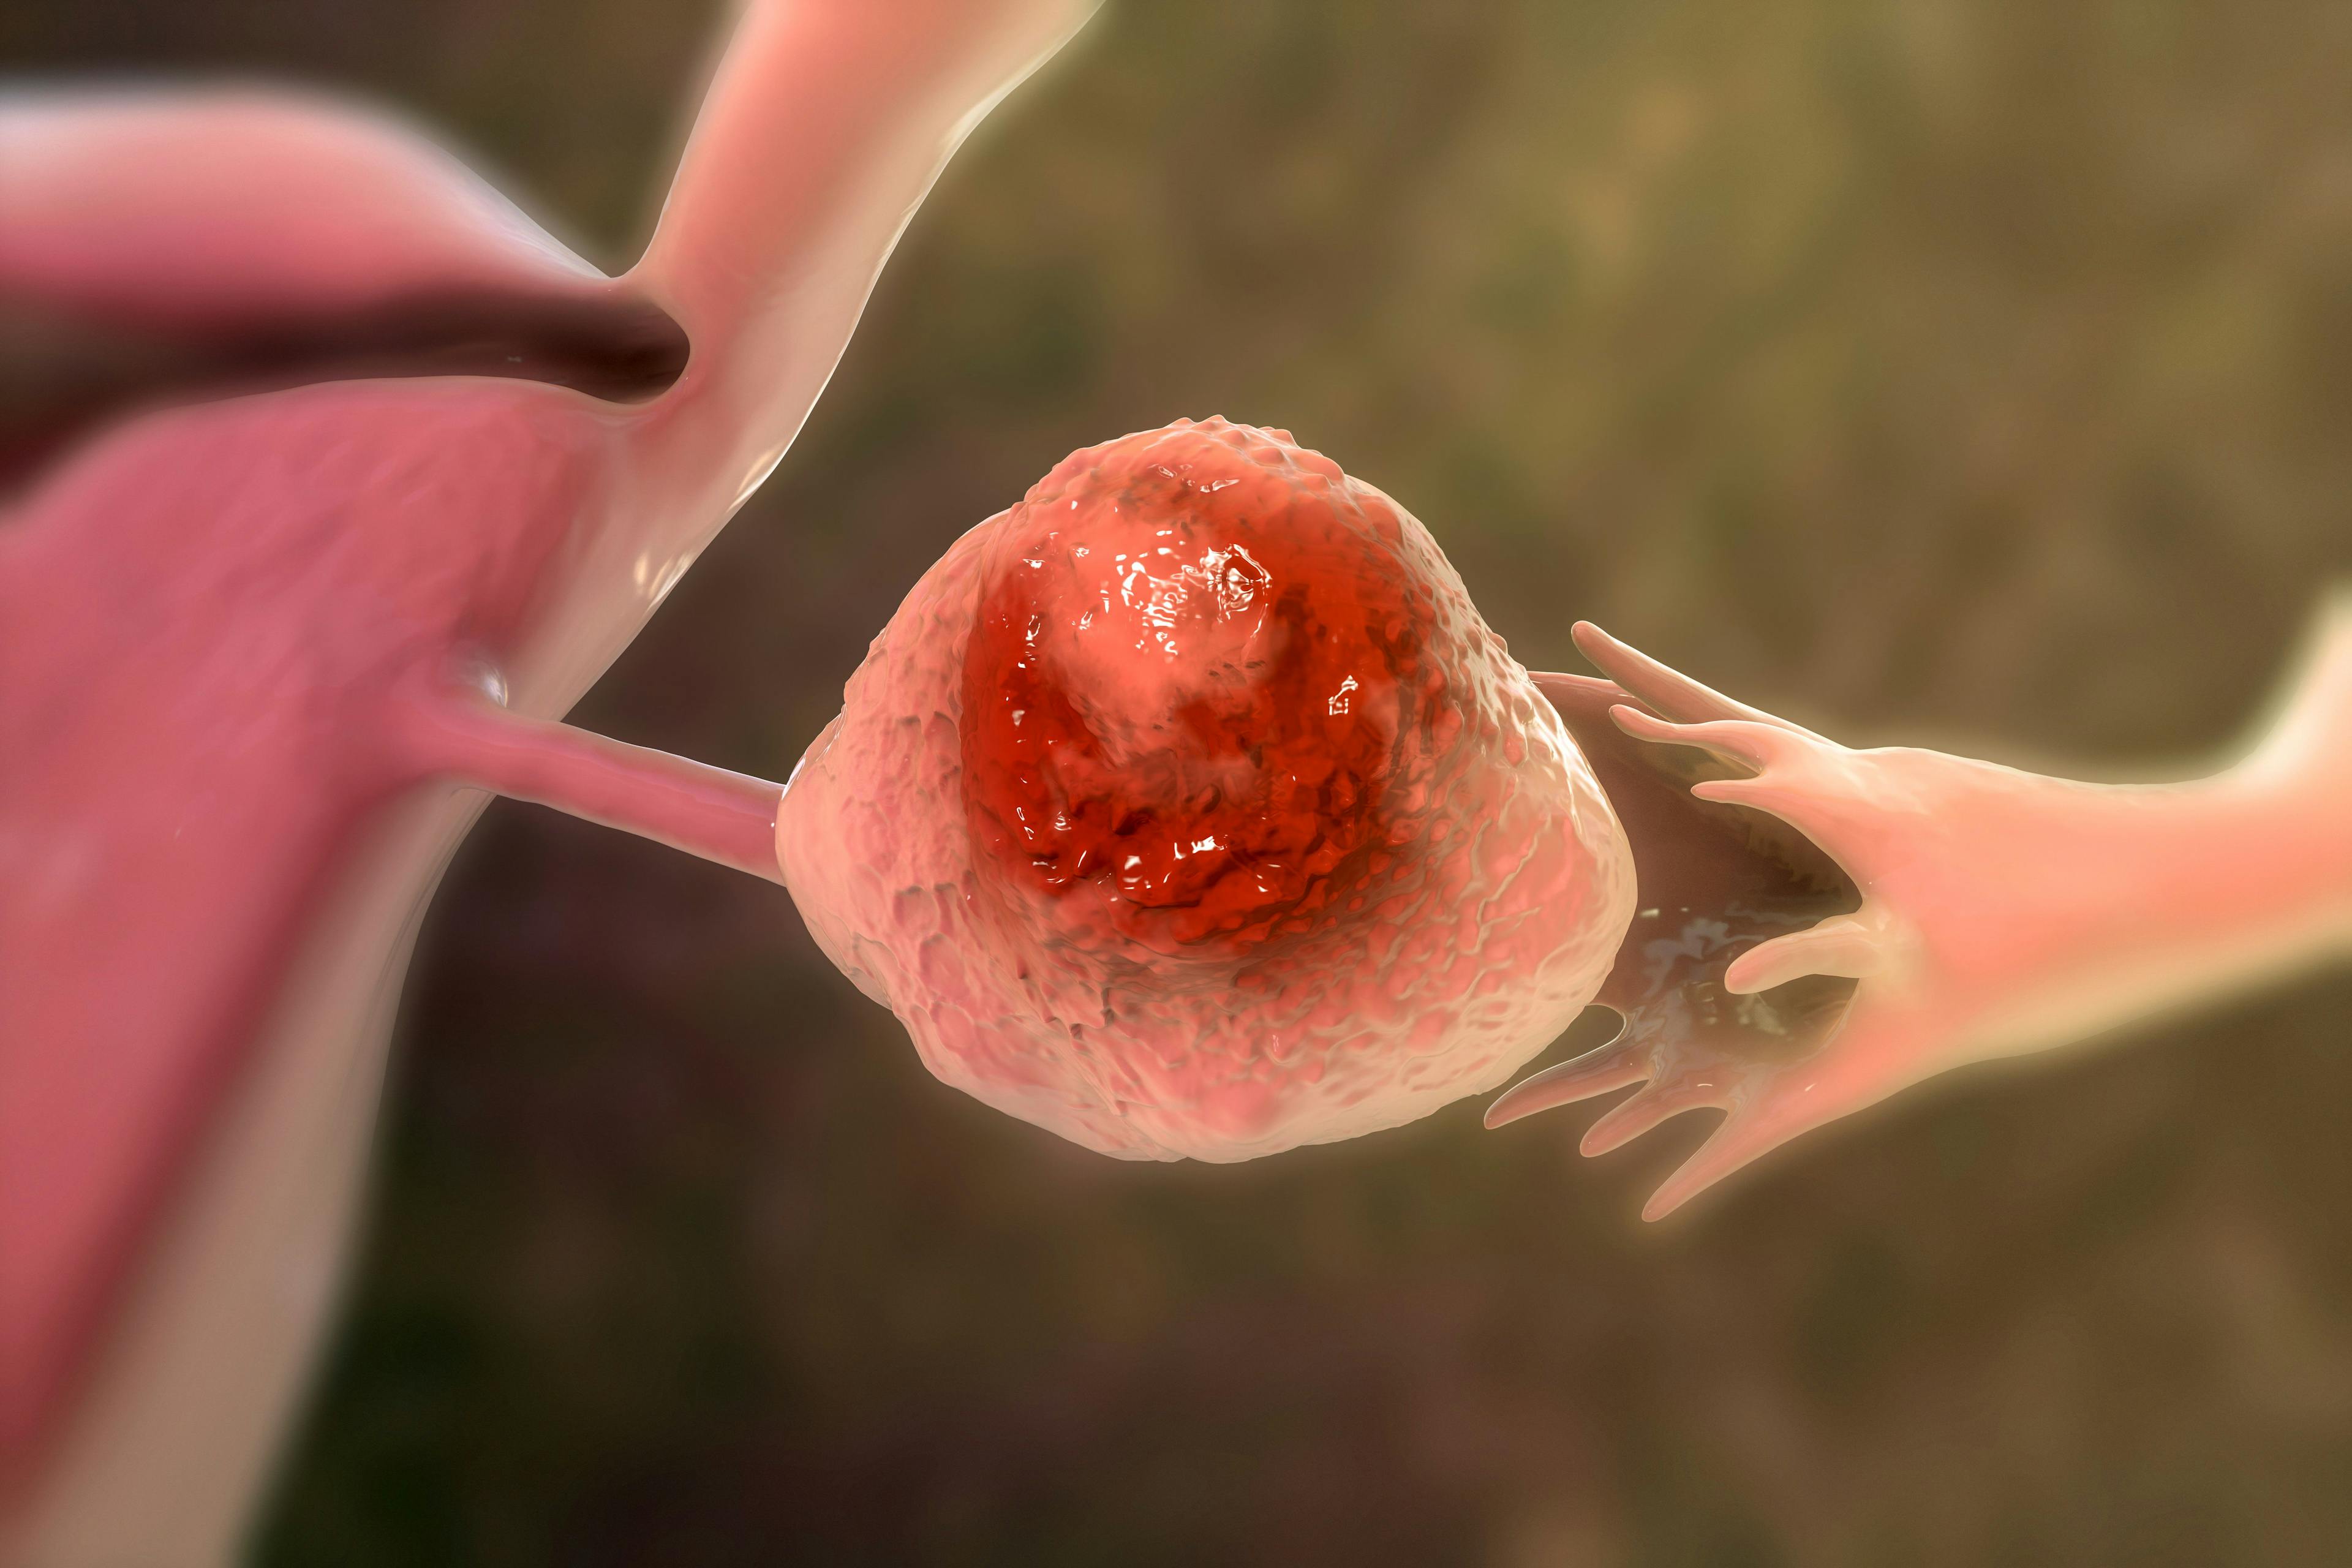 Ovarian cancer: © Dr_Microbe - stock.adobe.com